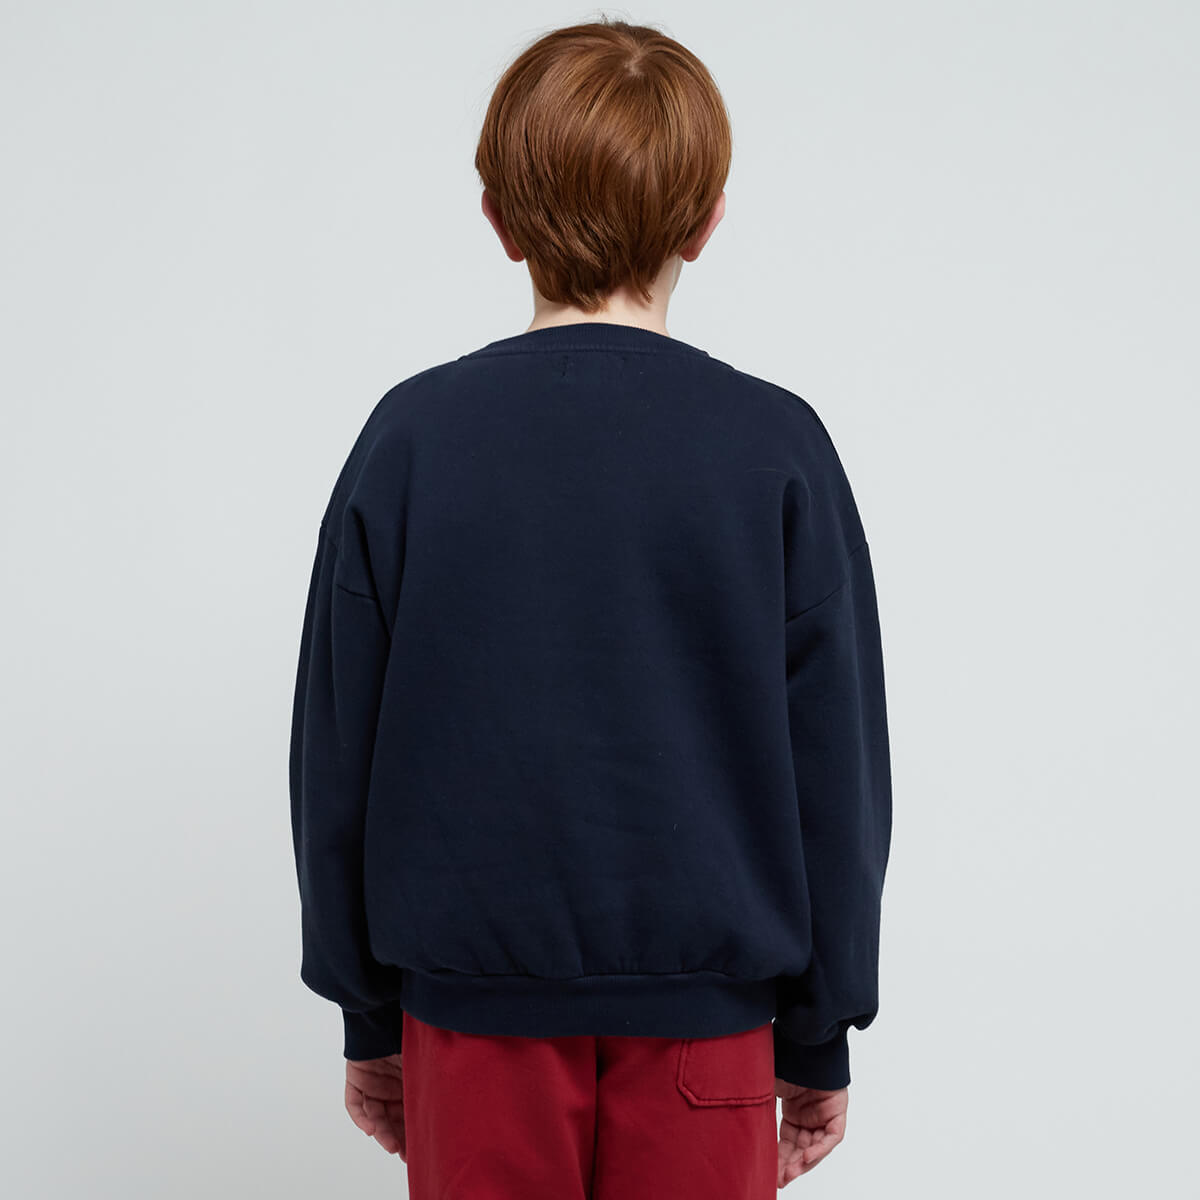 Headstand Child Sweatshirt by Bobo Choses – Junior Edition